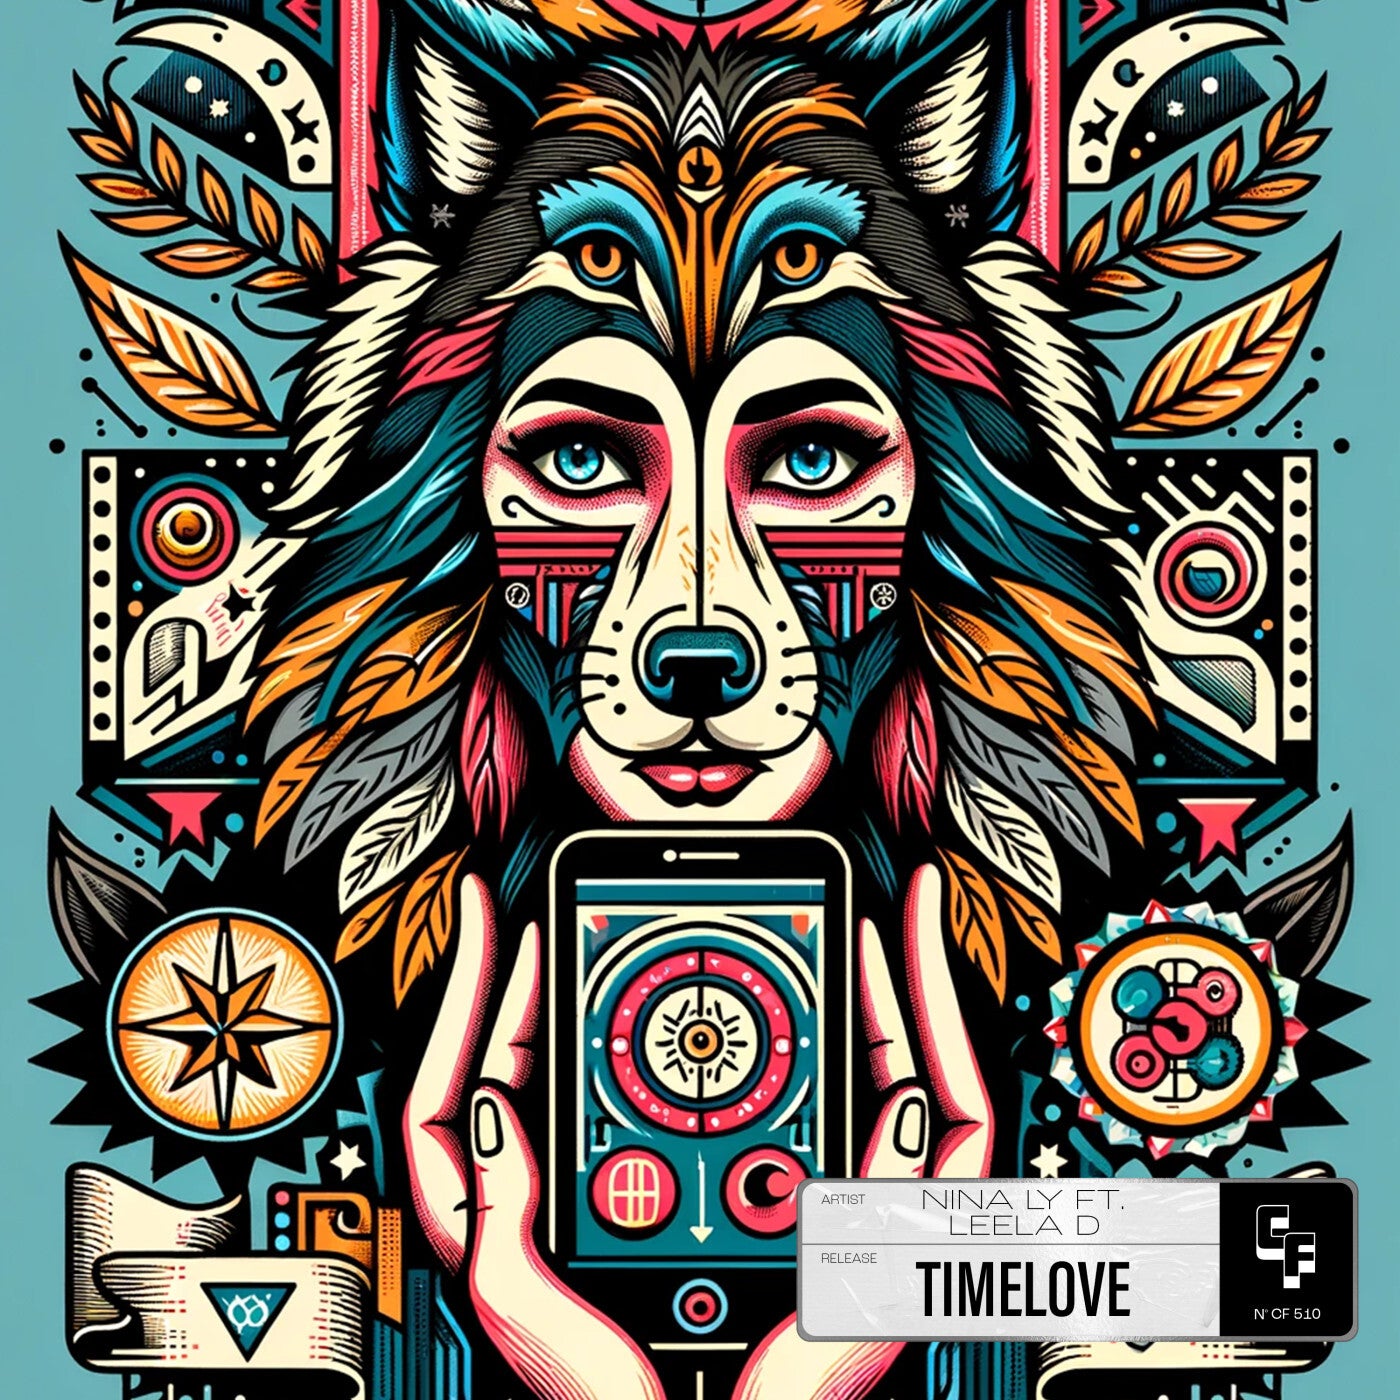 Timelove (Feat. Leela D)